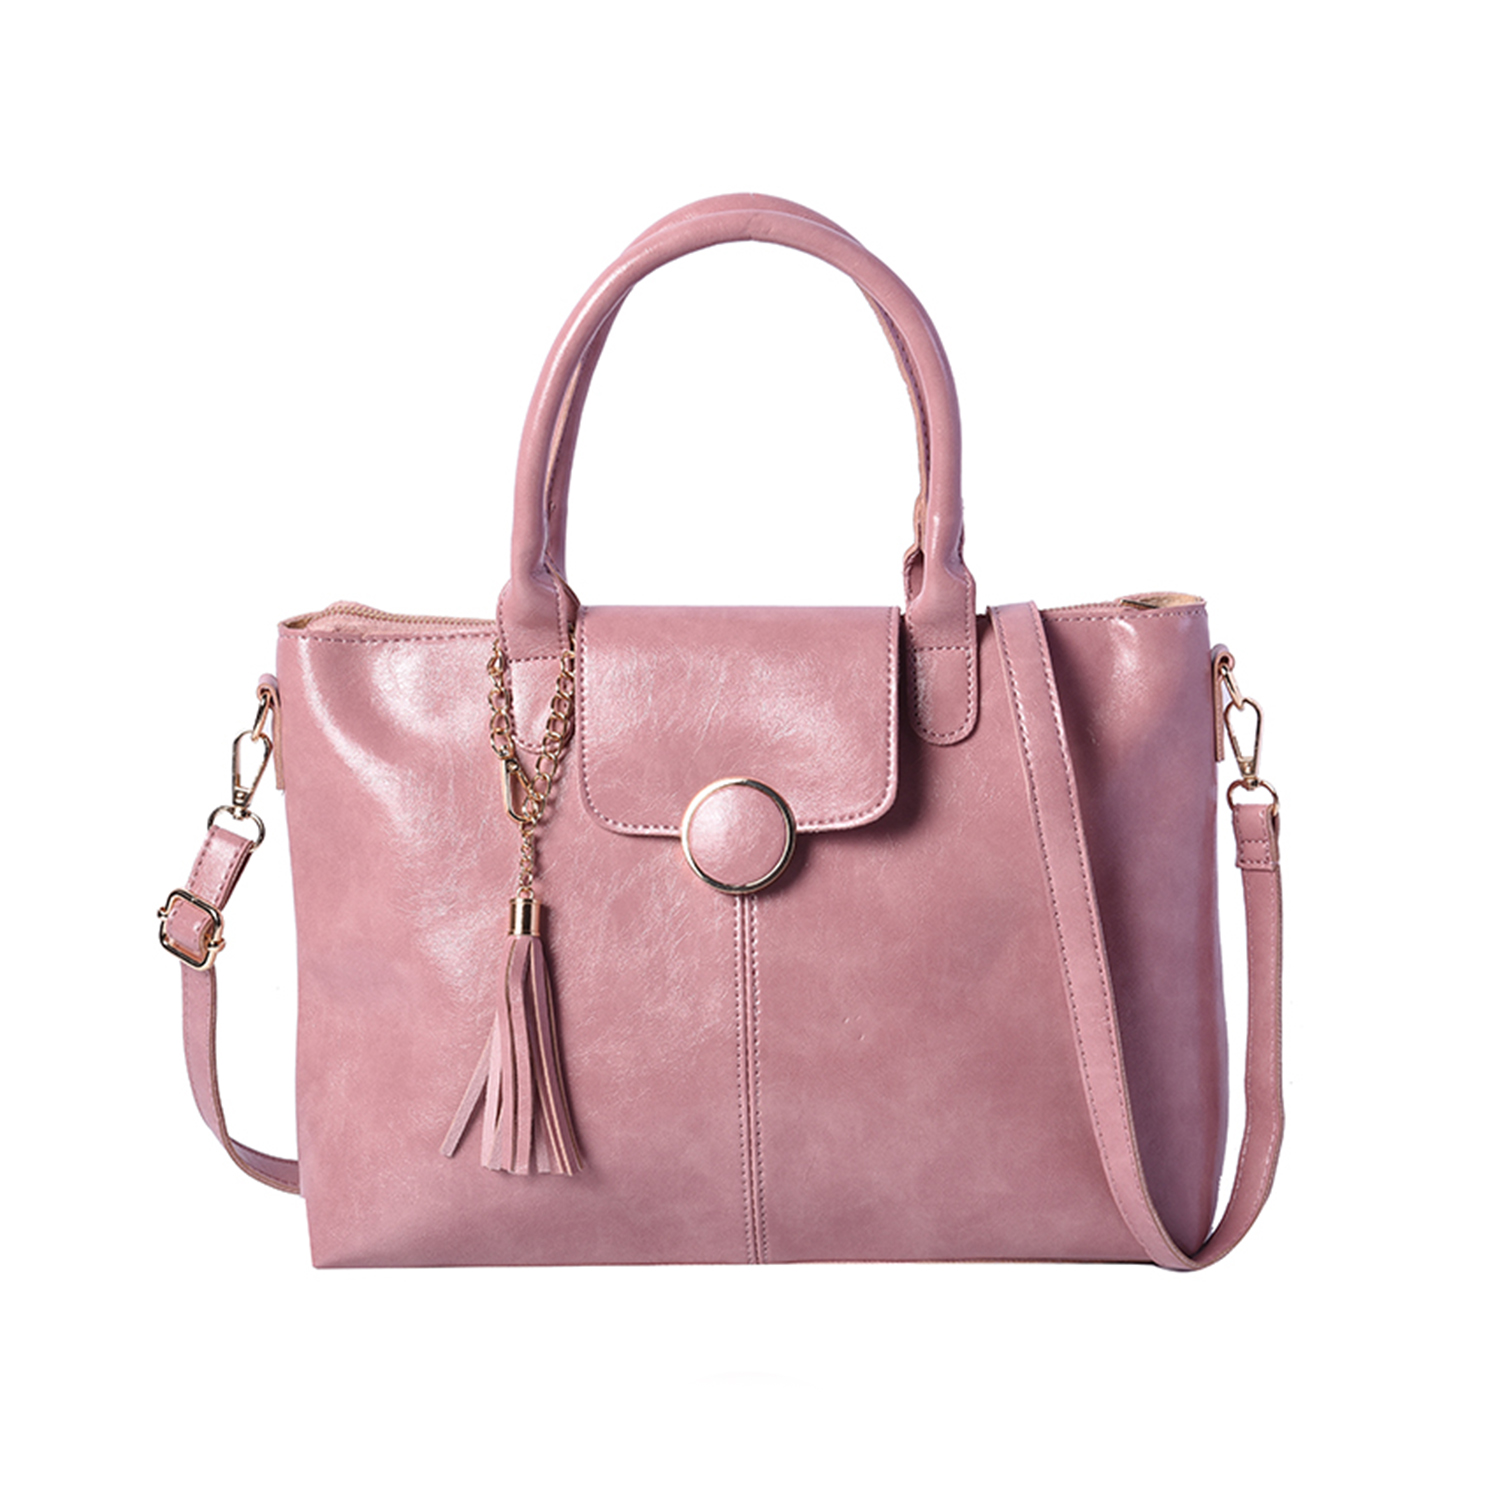 Solid Pink Tote Bag (35x12x26cm) with Adjustable Shoulder Strap and Tassel